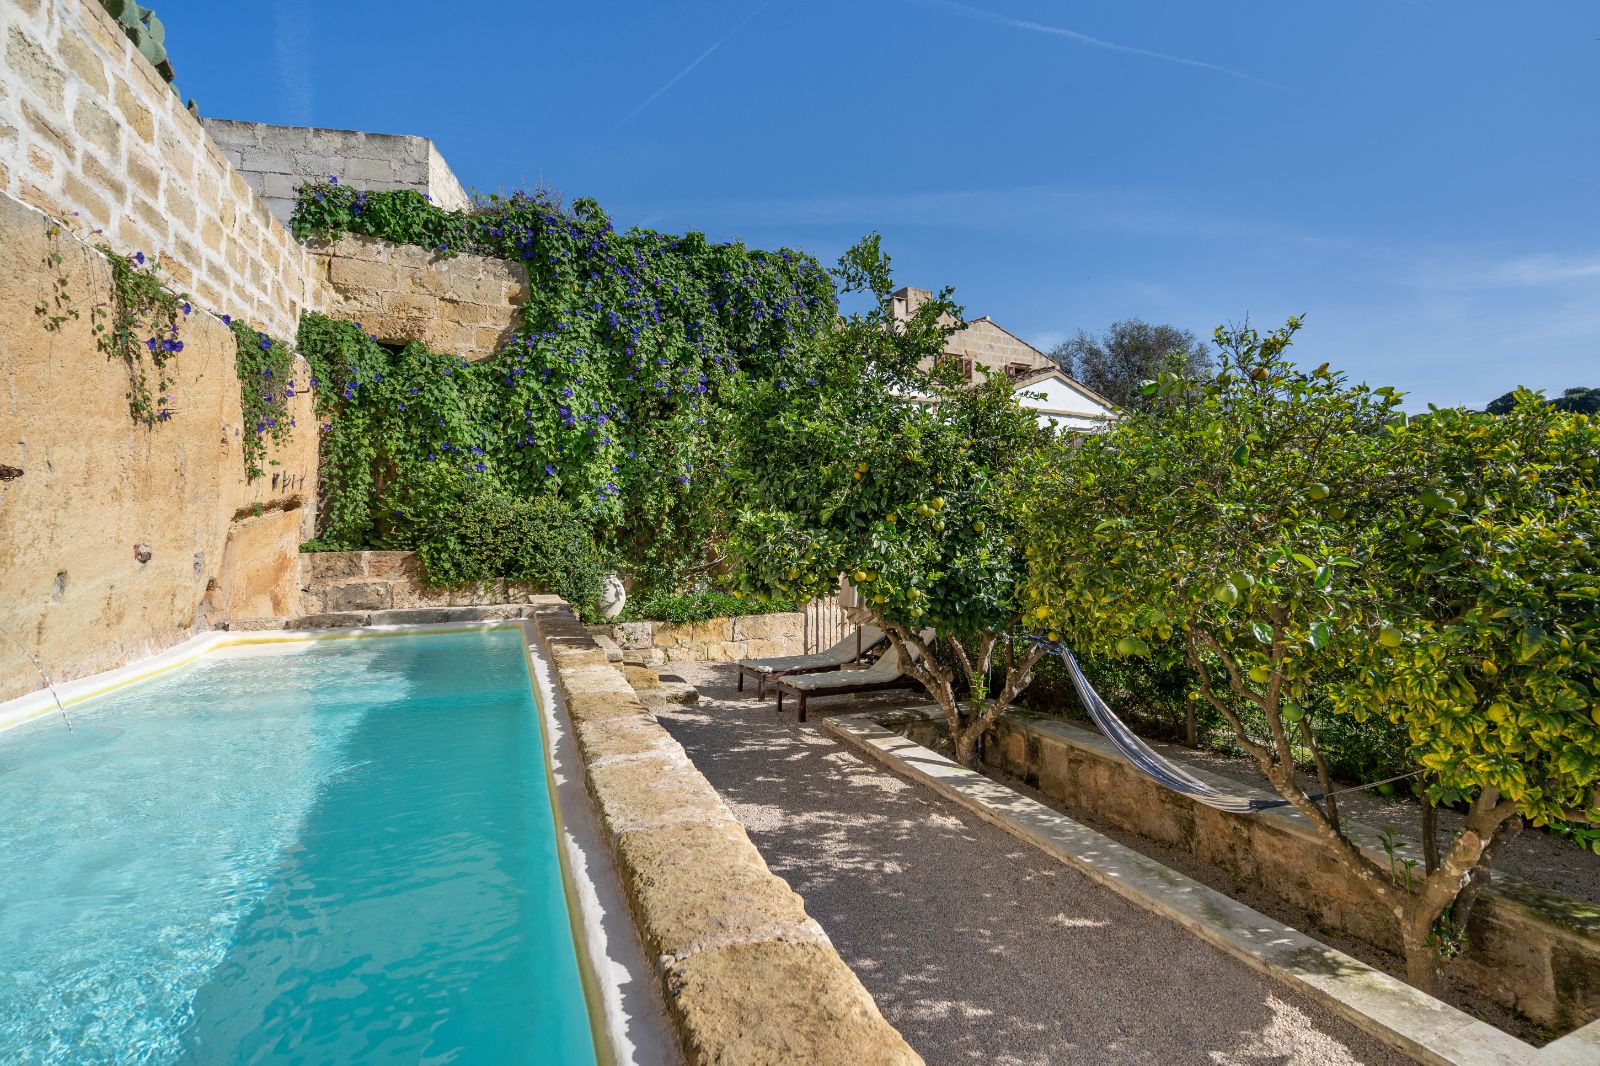 Pool at Alaior Gardens in Menorca